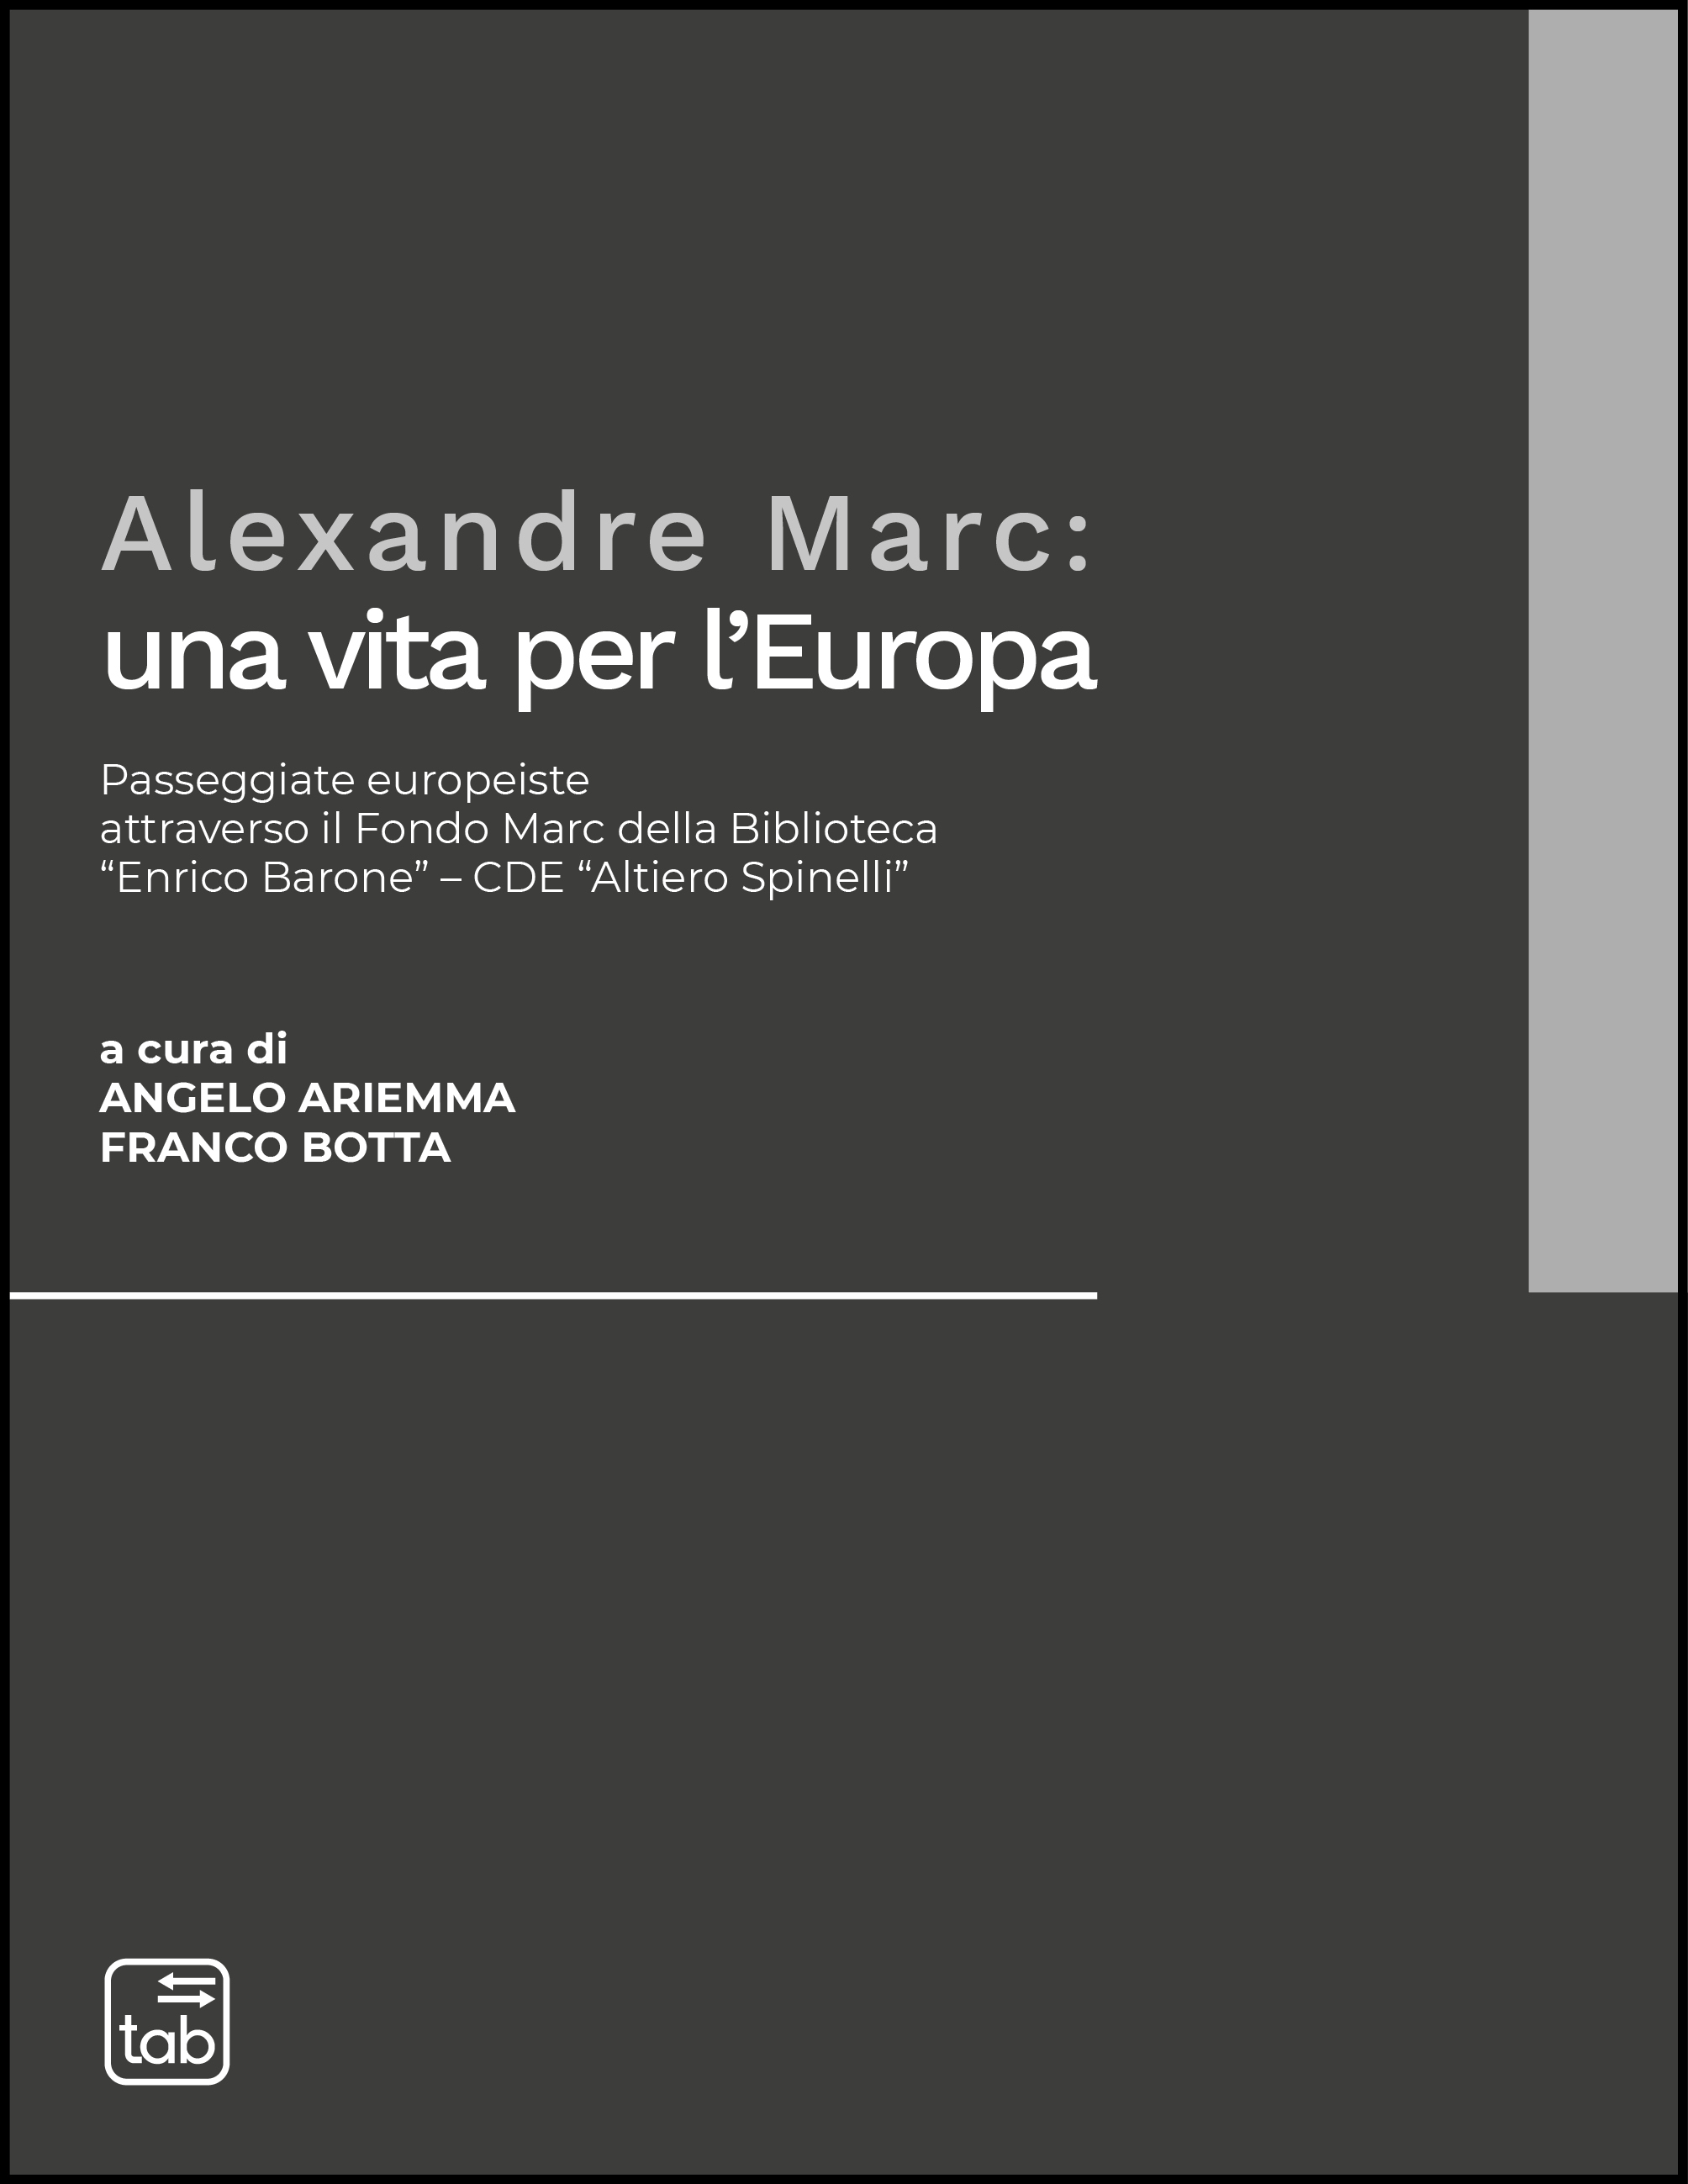 Alexandre Marc: una vita per l’Europa